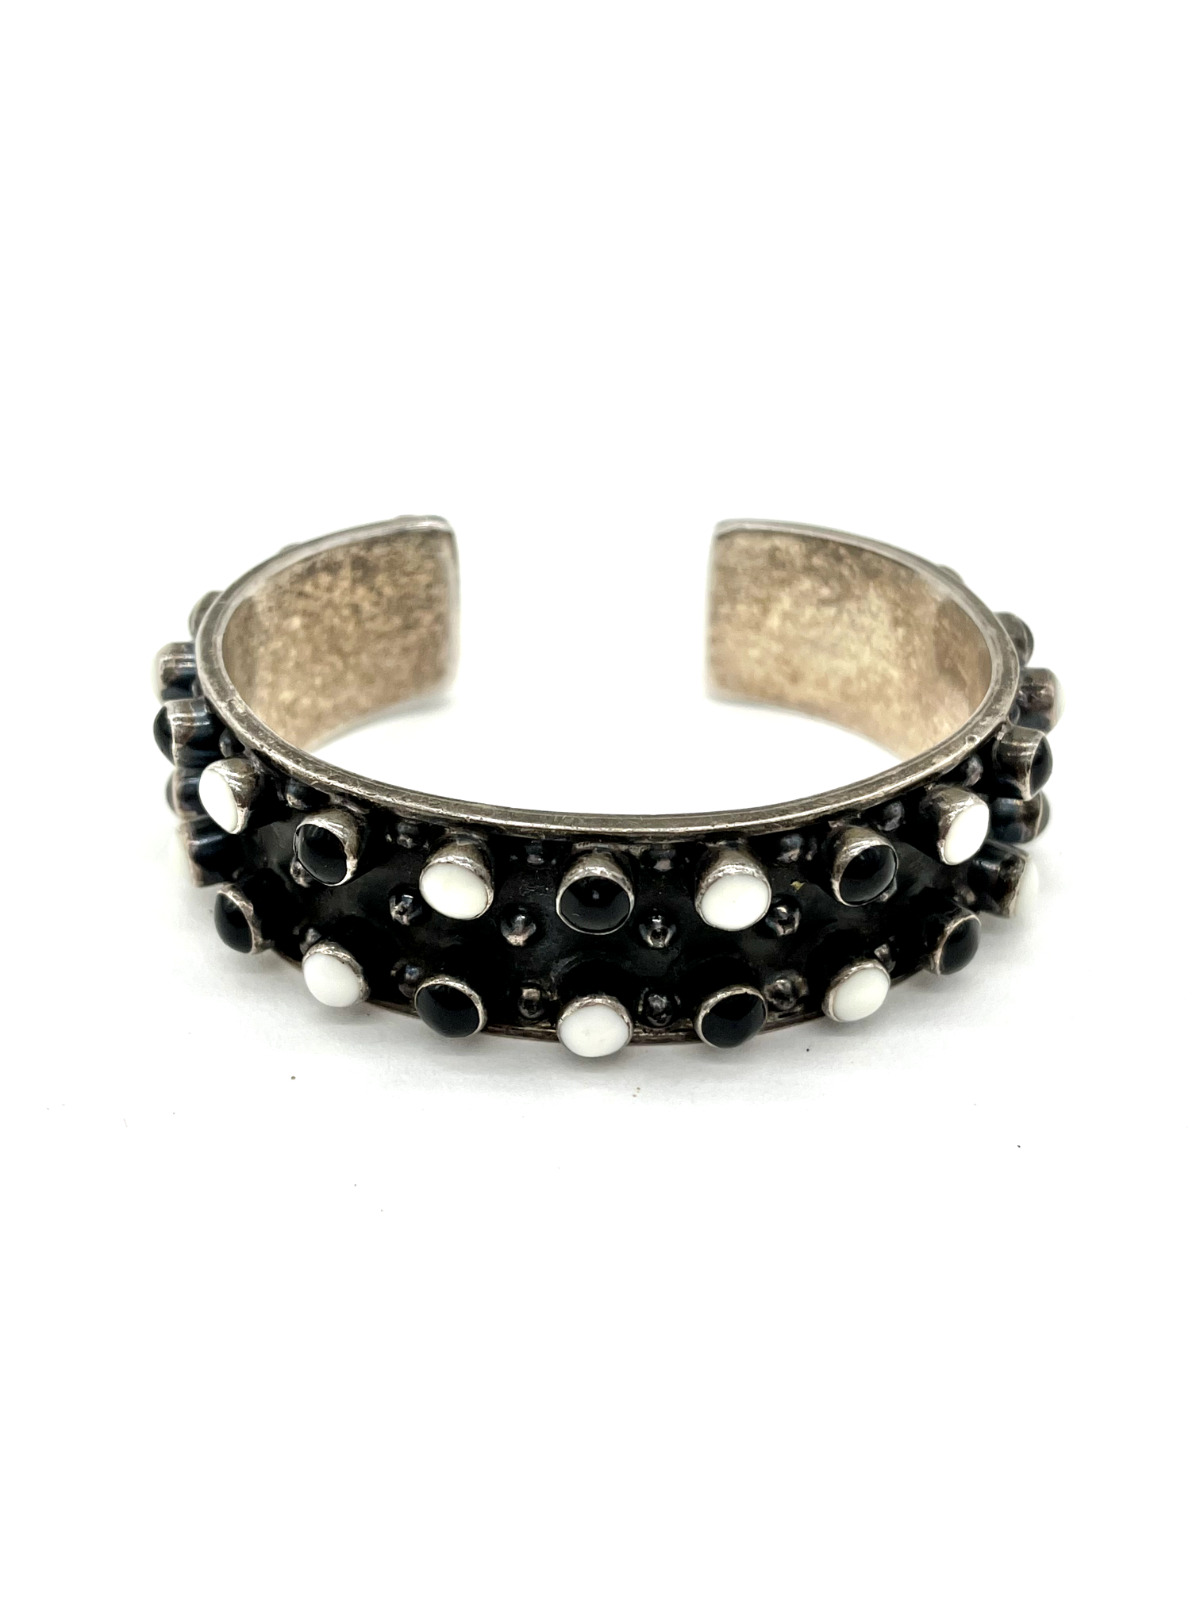 Vintage Native American Cuff Bracelet - Silver, Black/White Stones Modern Design